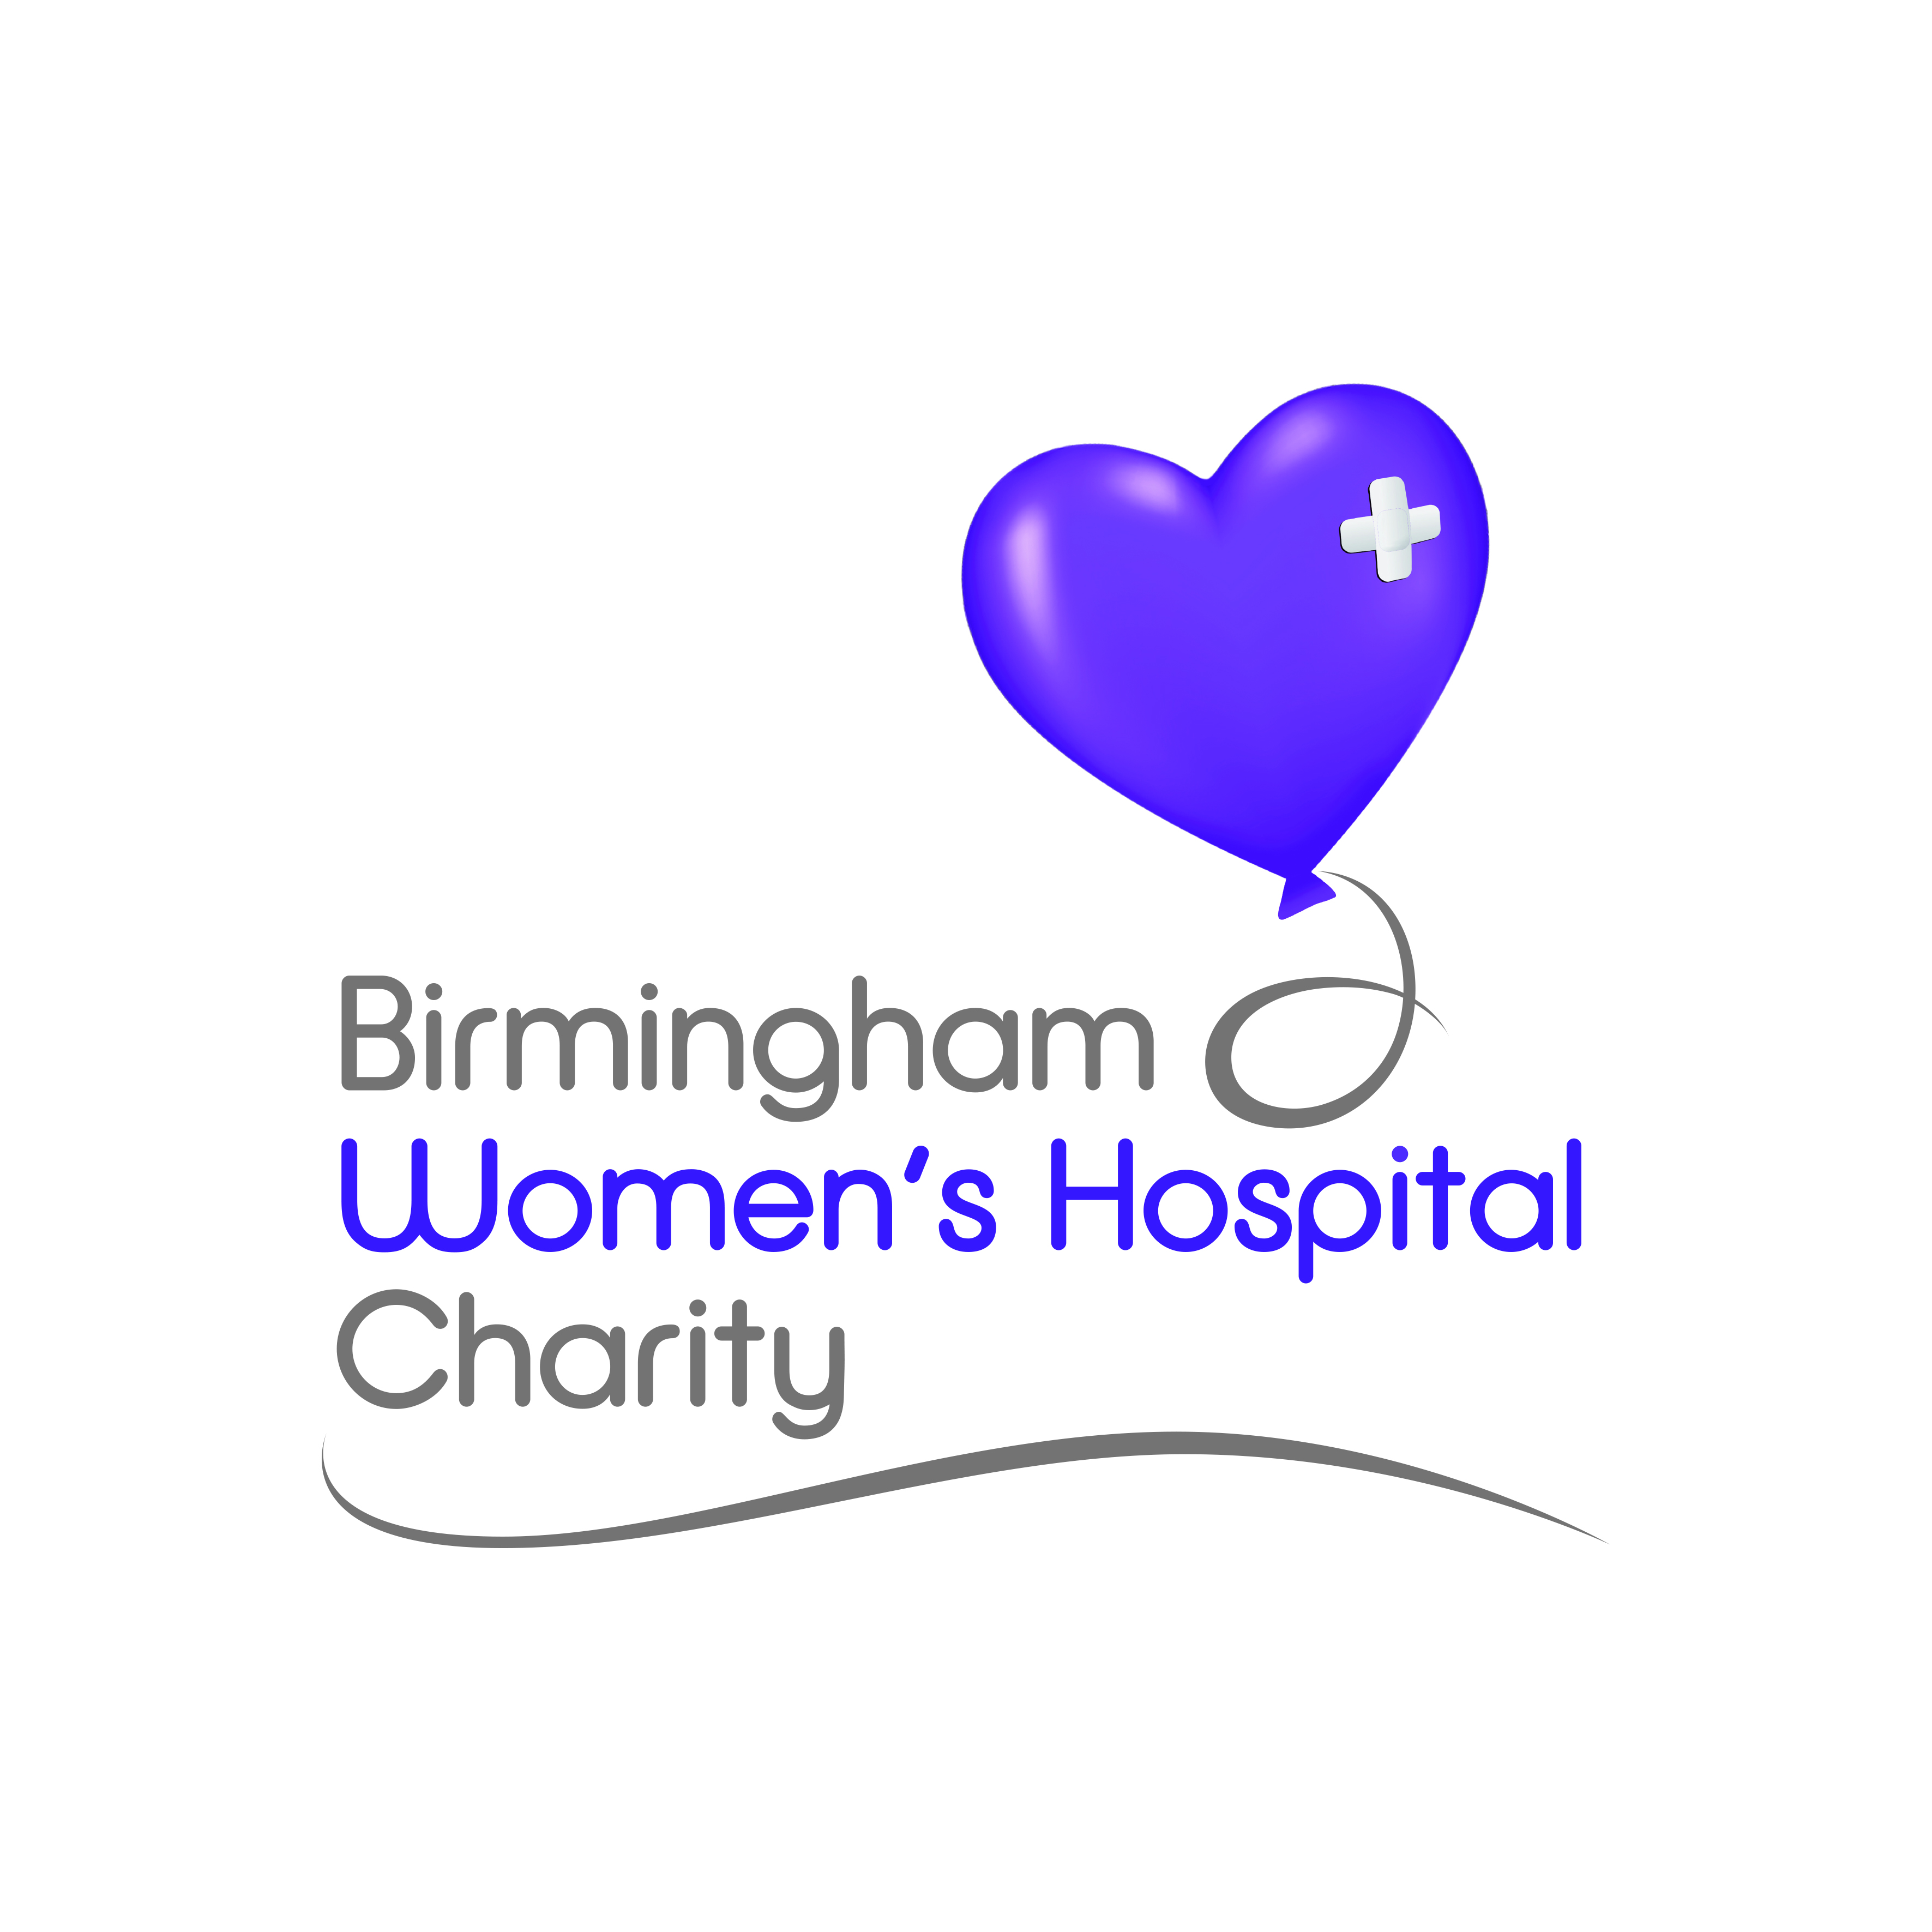 Birmingham Women's Hospital Charity